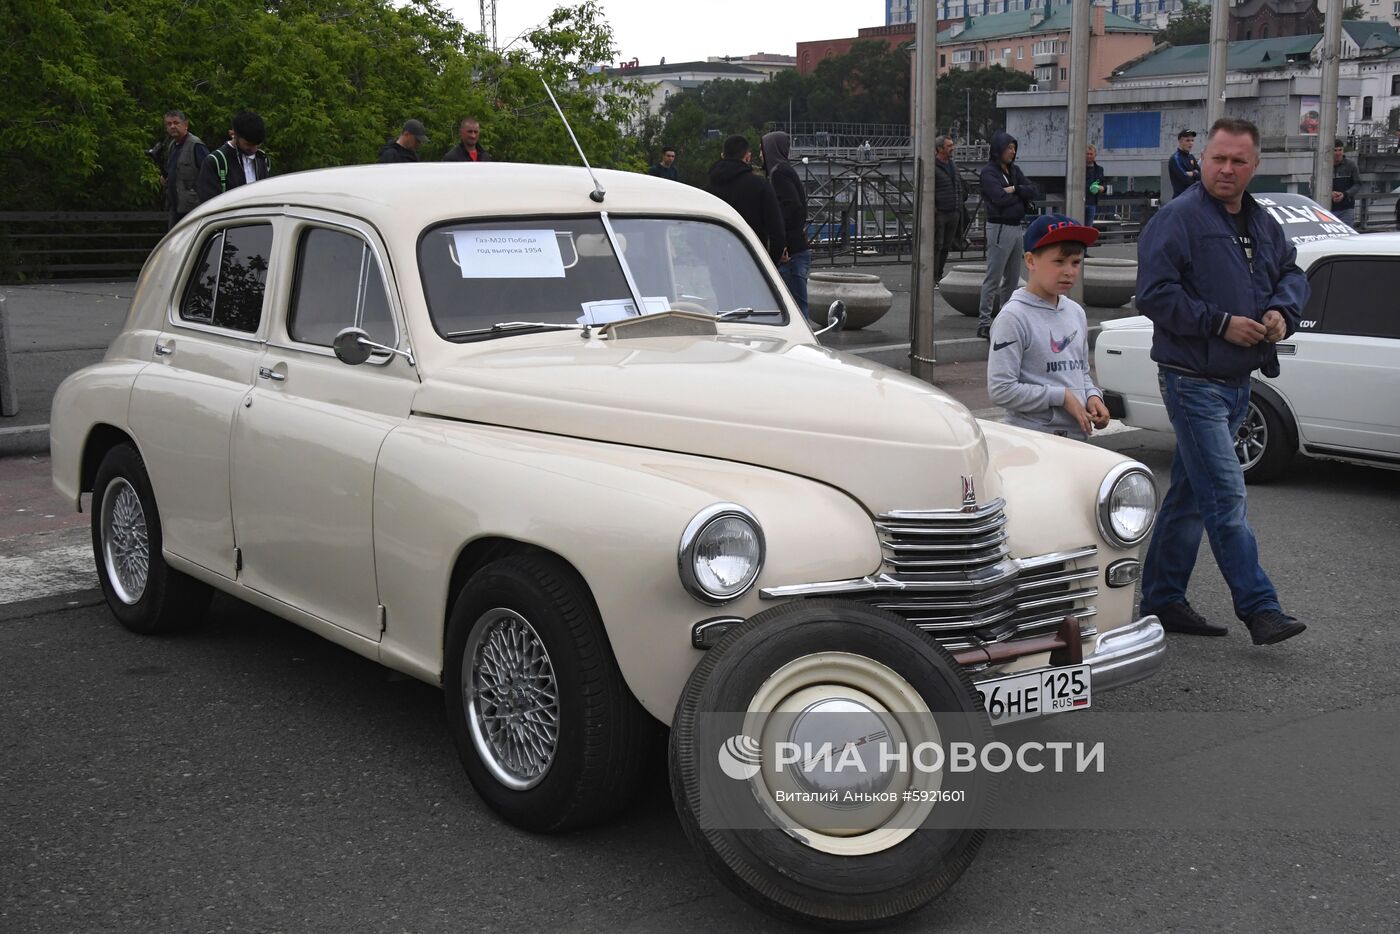 Фестиваль автомотоспорта во Владивостоке  